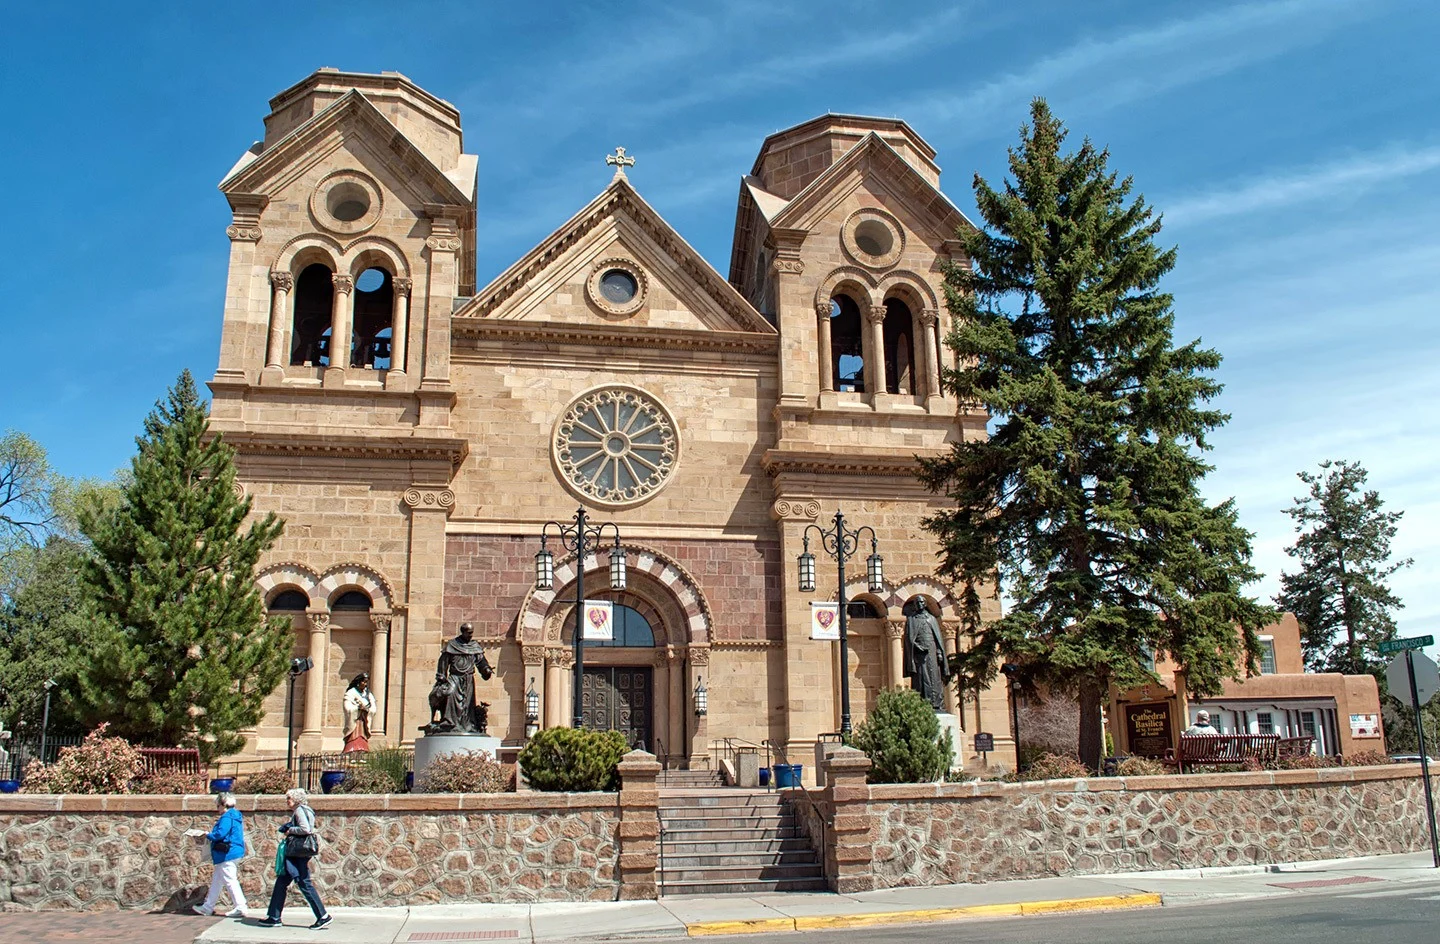 Cathedral Basilica of Saint Francis in Santa Fe, New Mexico